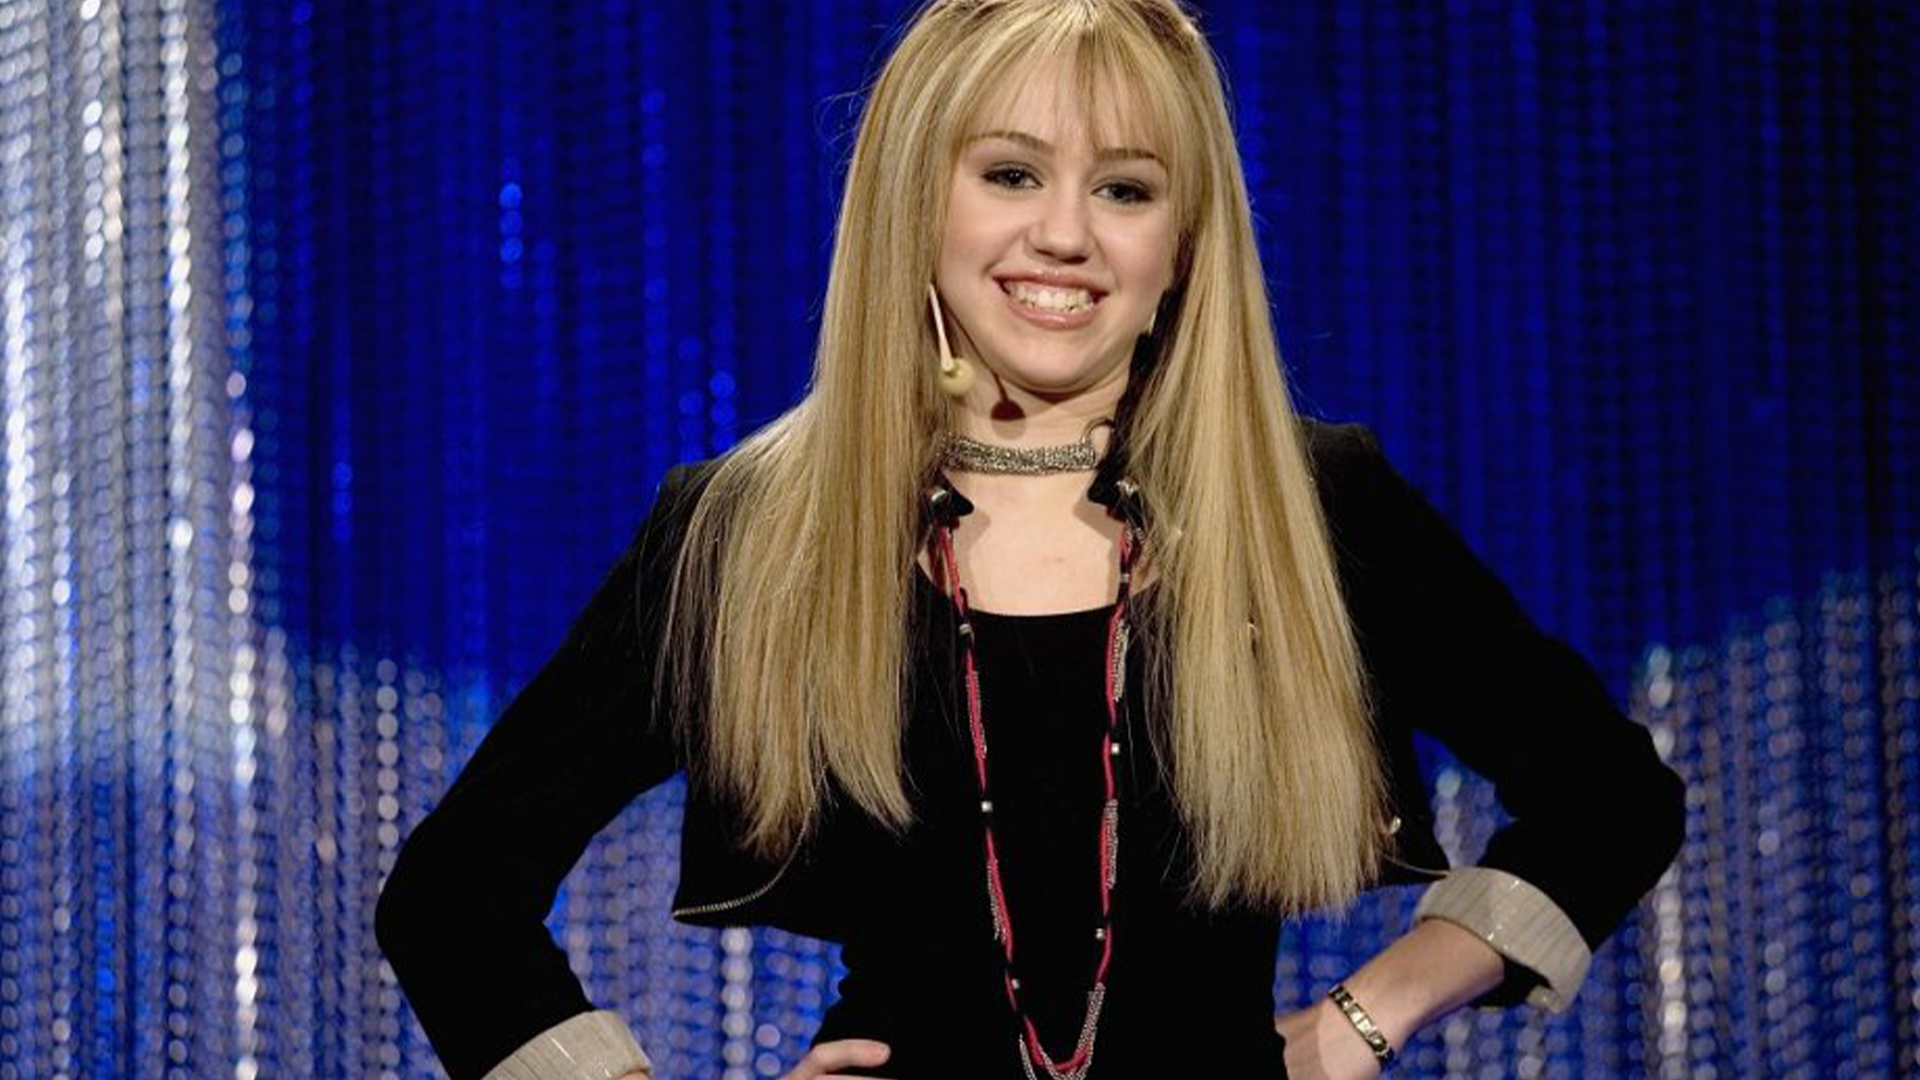 Hannah Montana/ Miley Cyrus